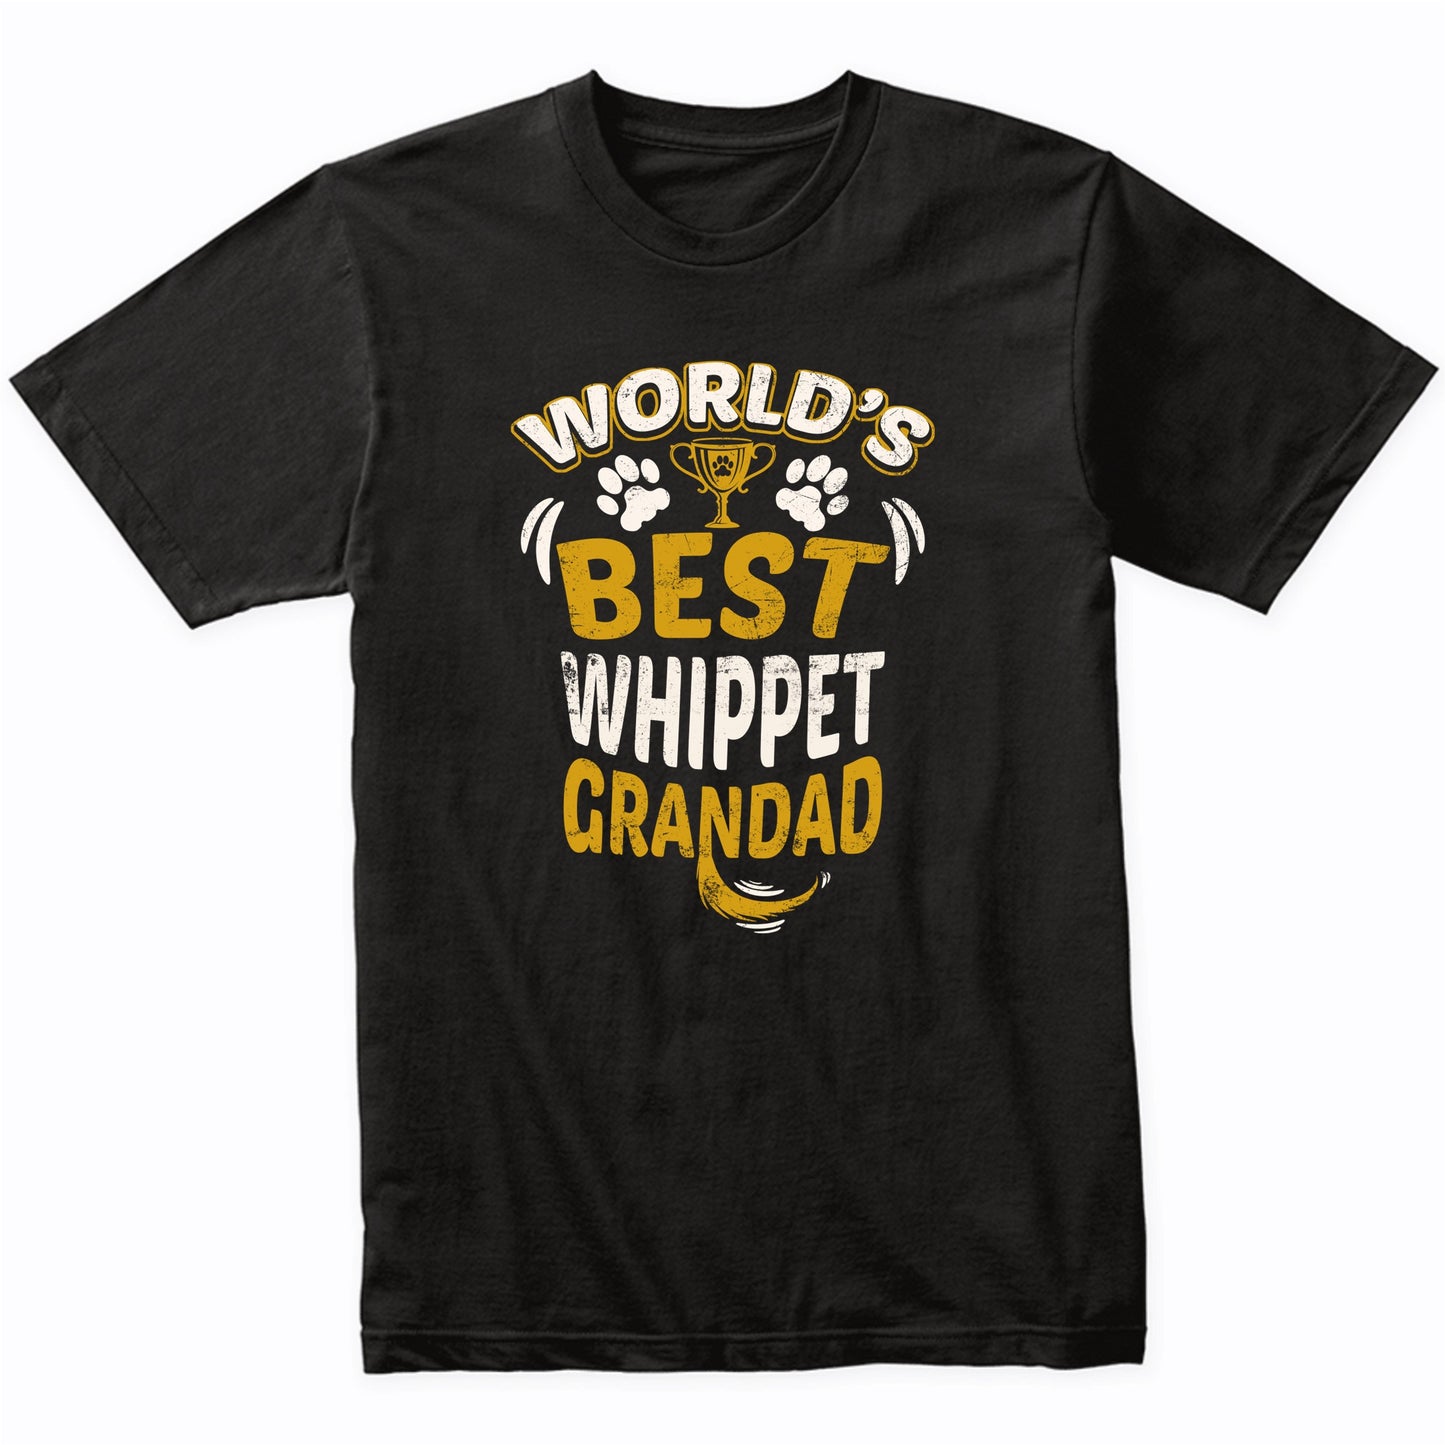 World's Best Whippet Grandad Graphic T-Shirt